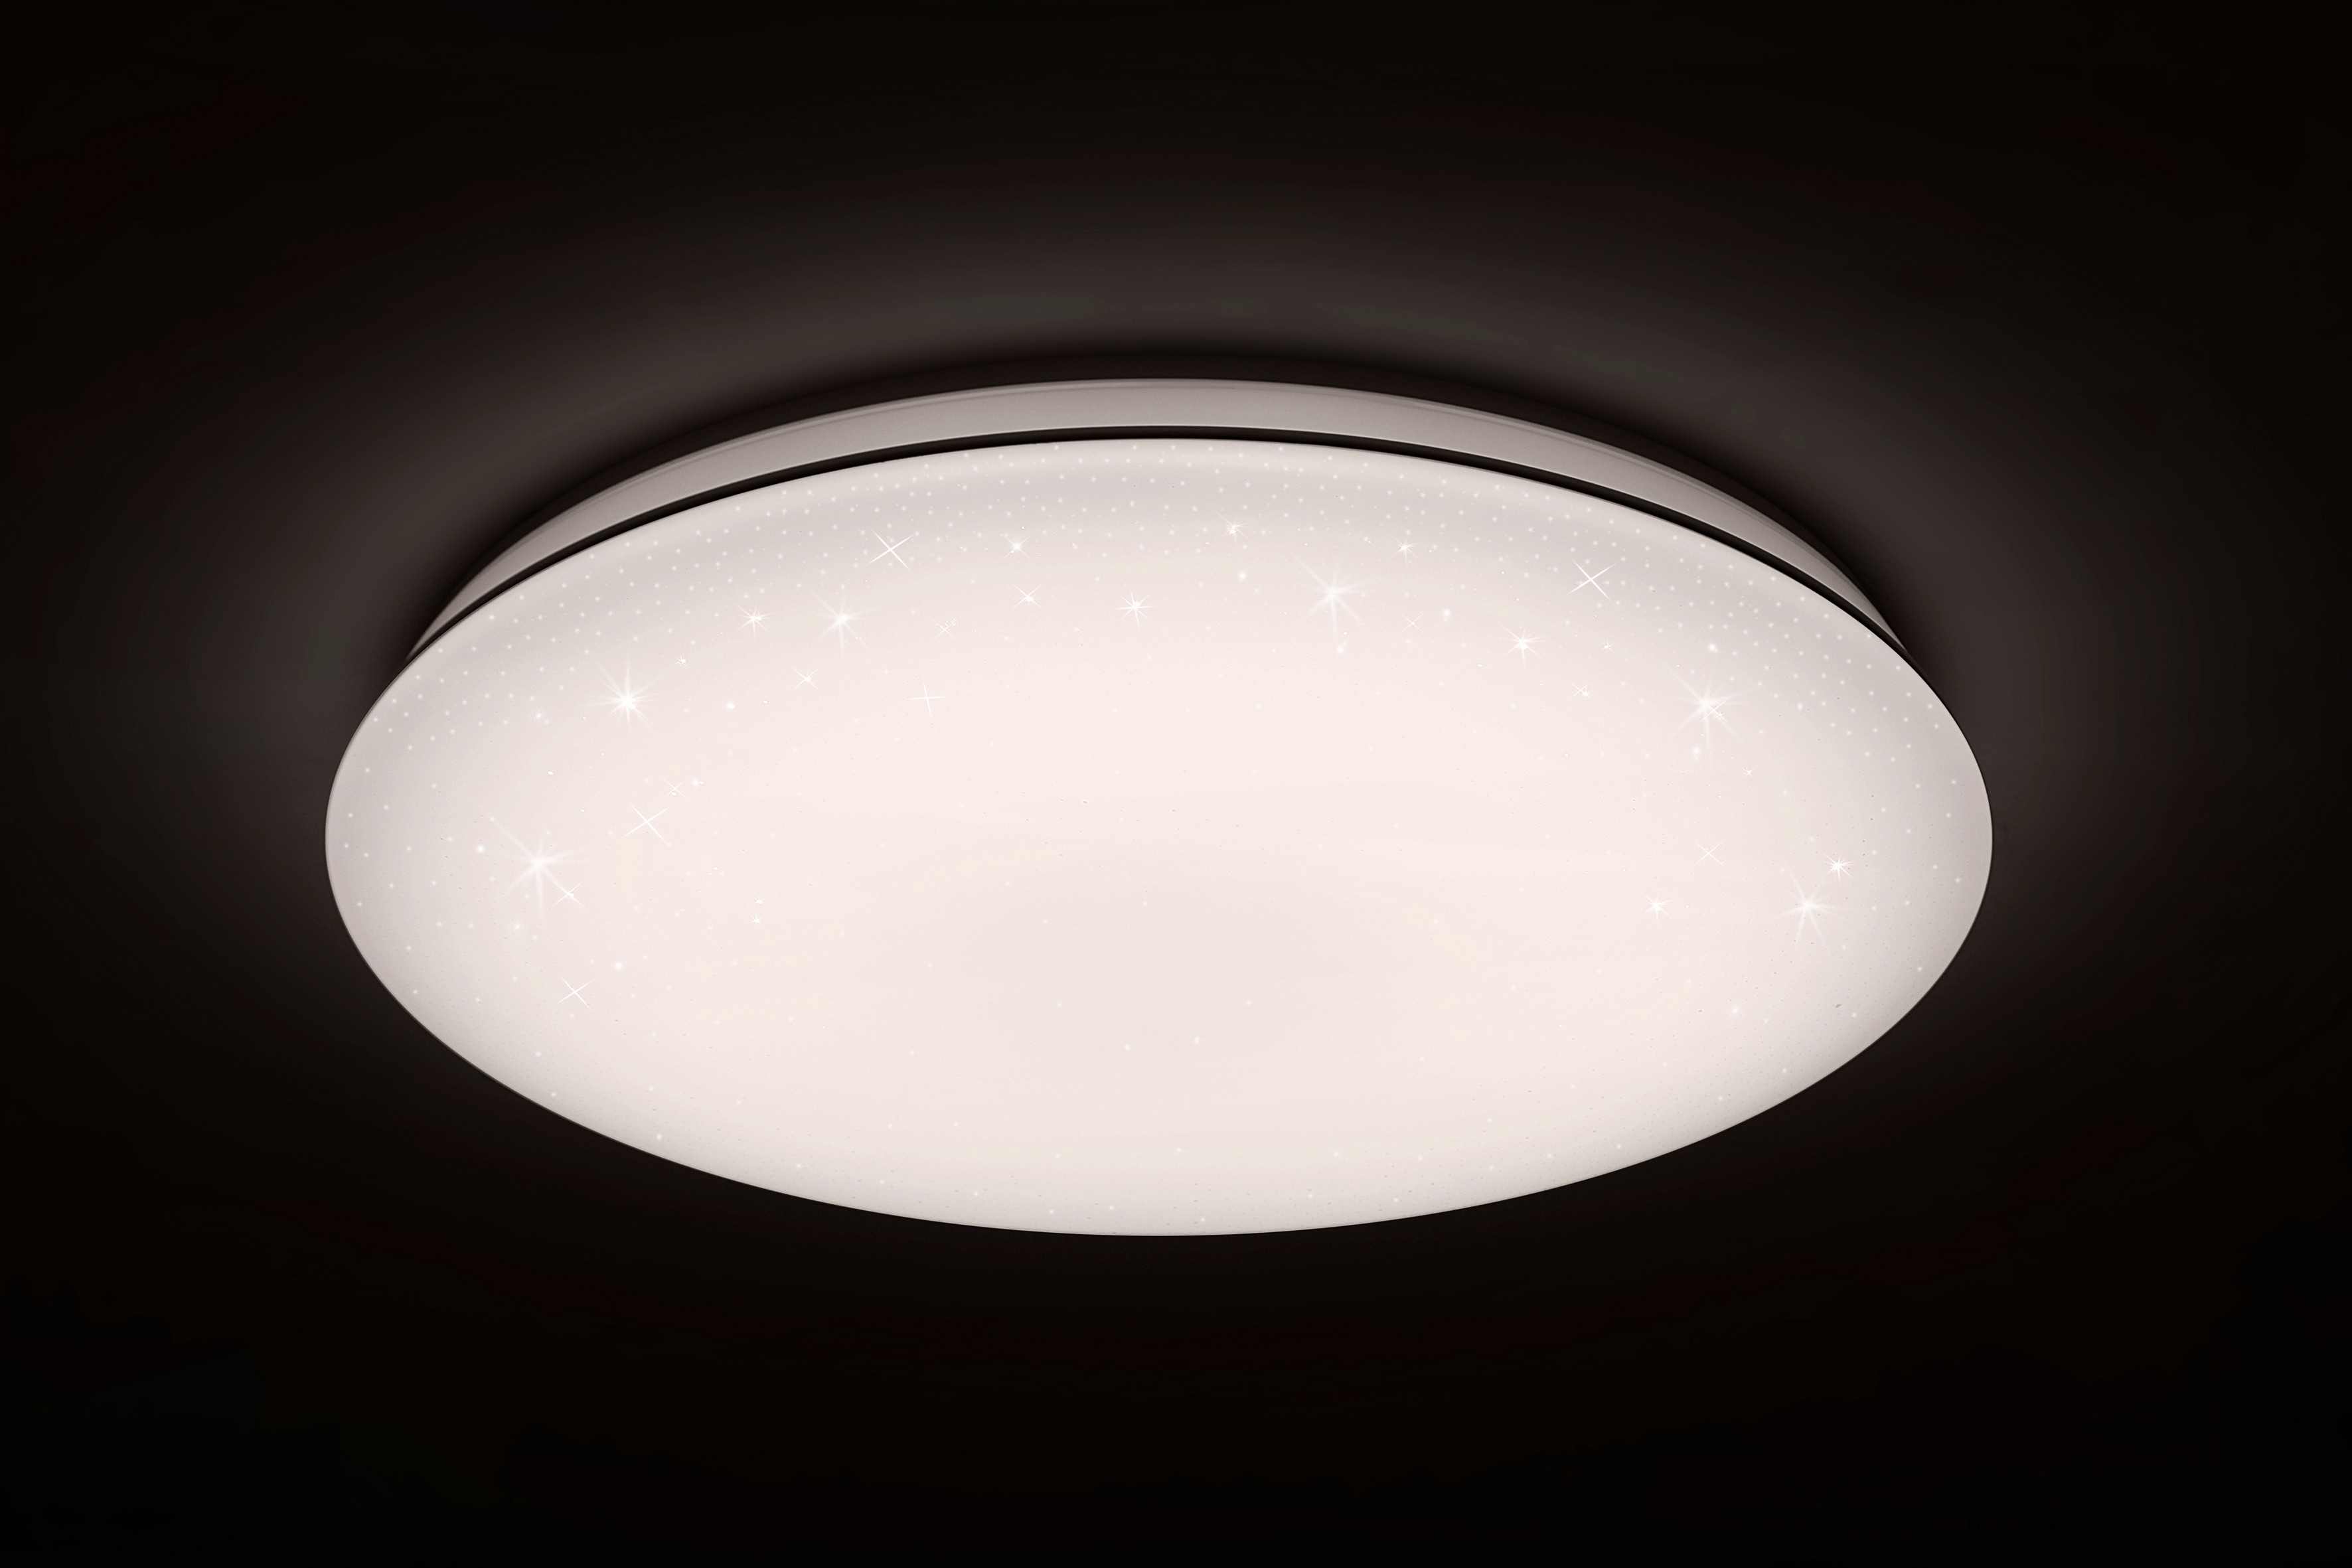 Aluminous Frame Design Round Ceiling Lamp ,  Remote Control Large Round LED Ceiling Light